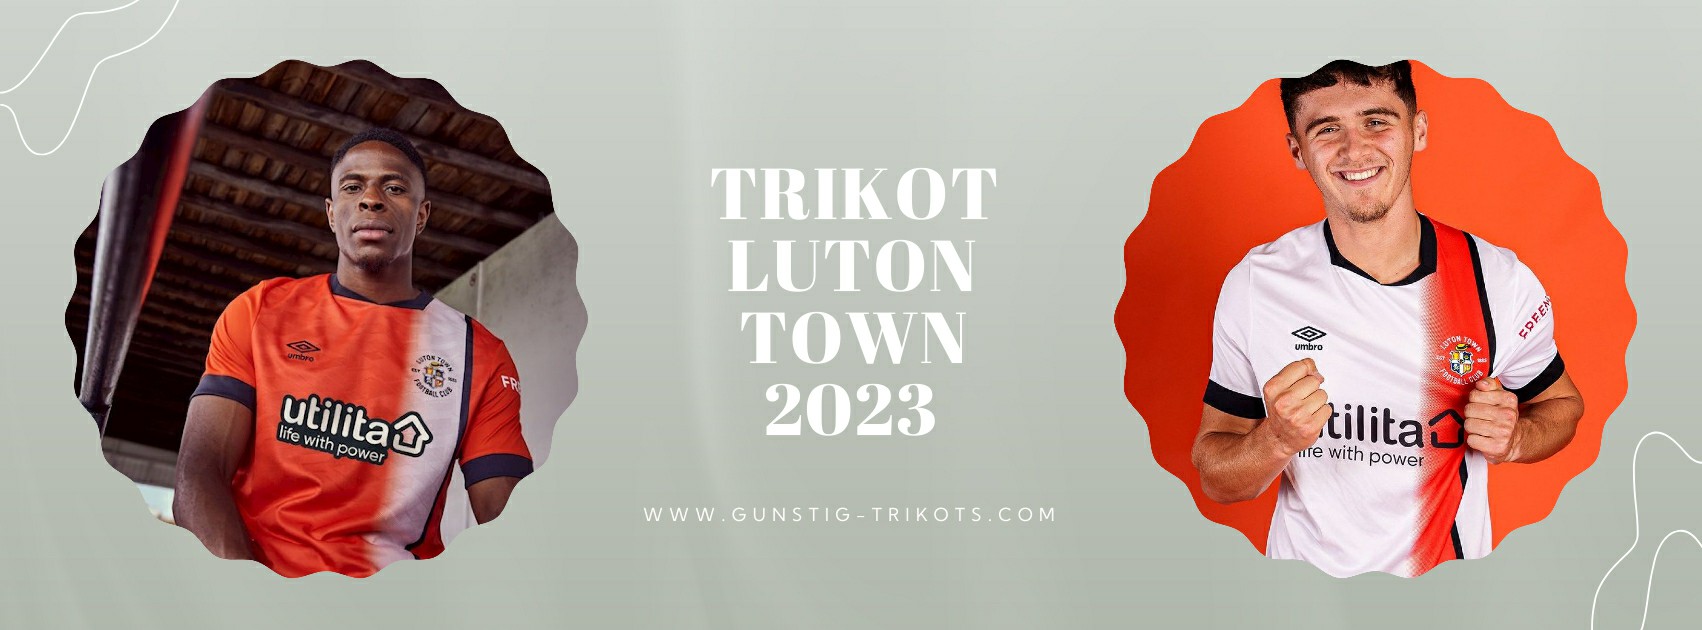 Luton Town Trikot 2023-2024